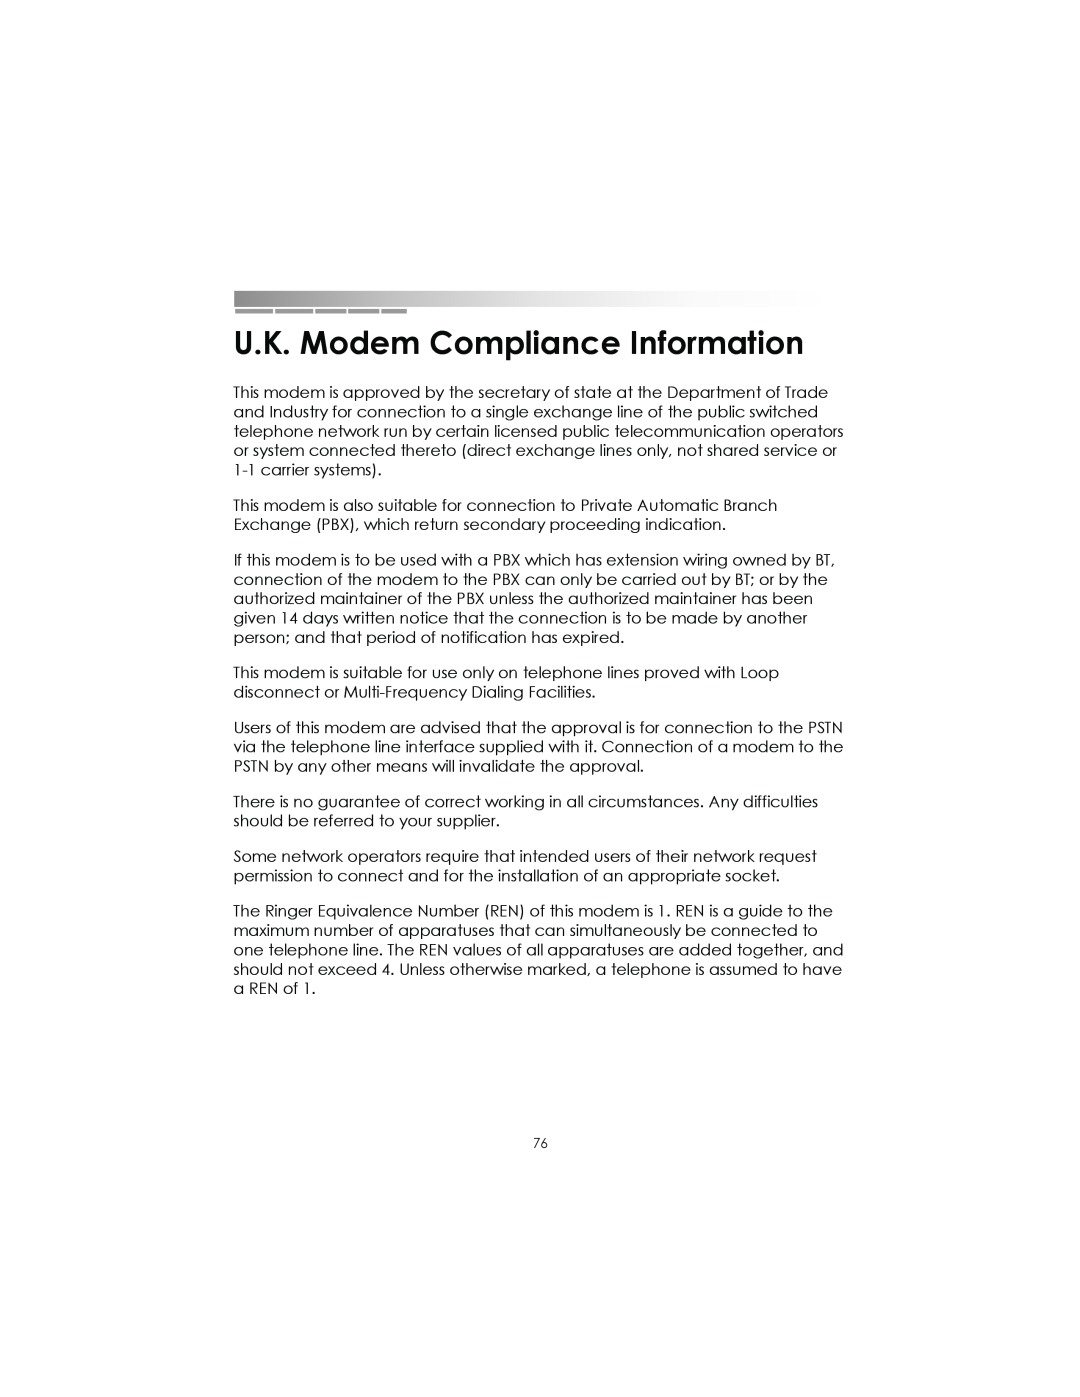 eMachines AAFW53700001K0 manual U.K. Modem Compliance Information 